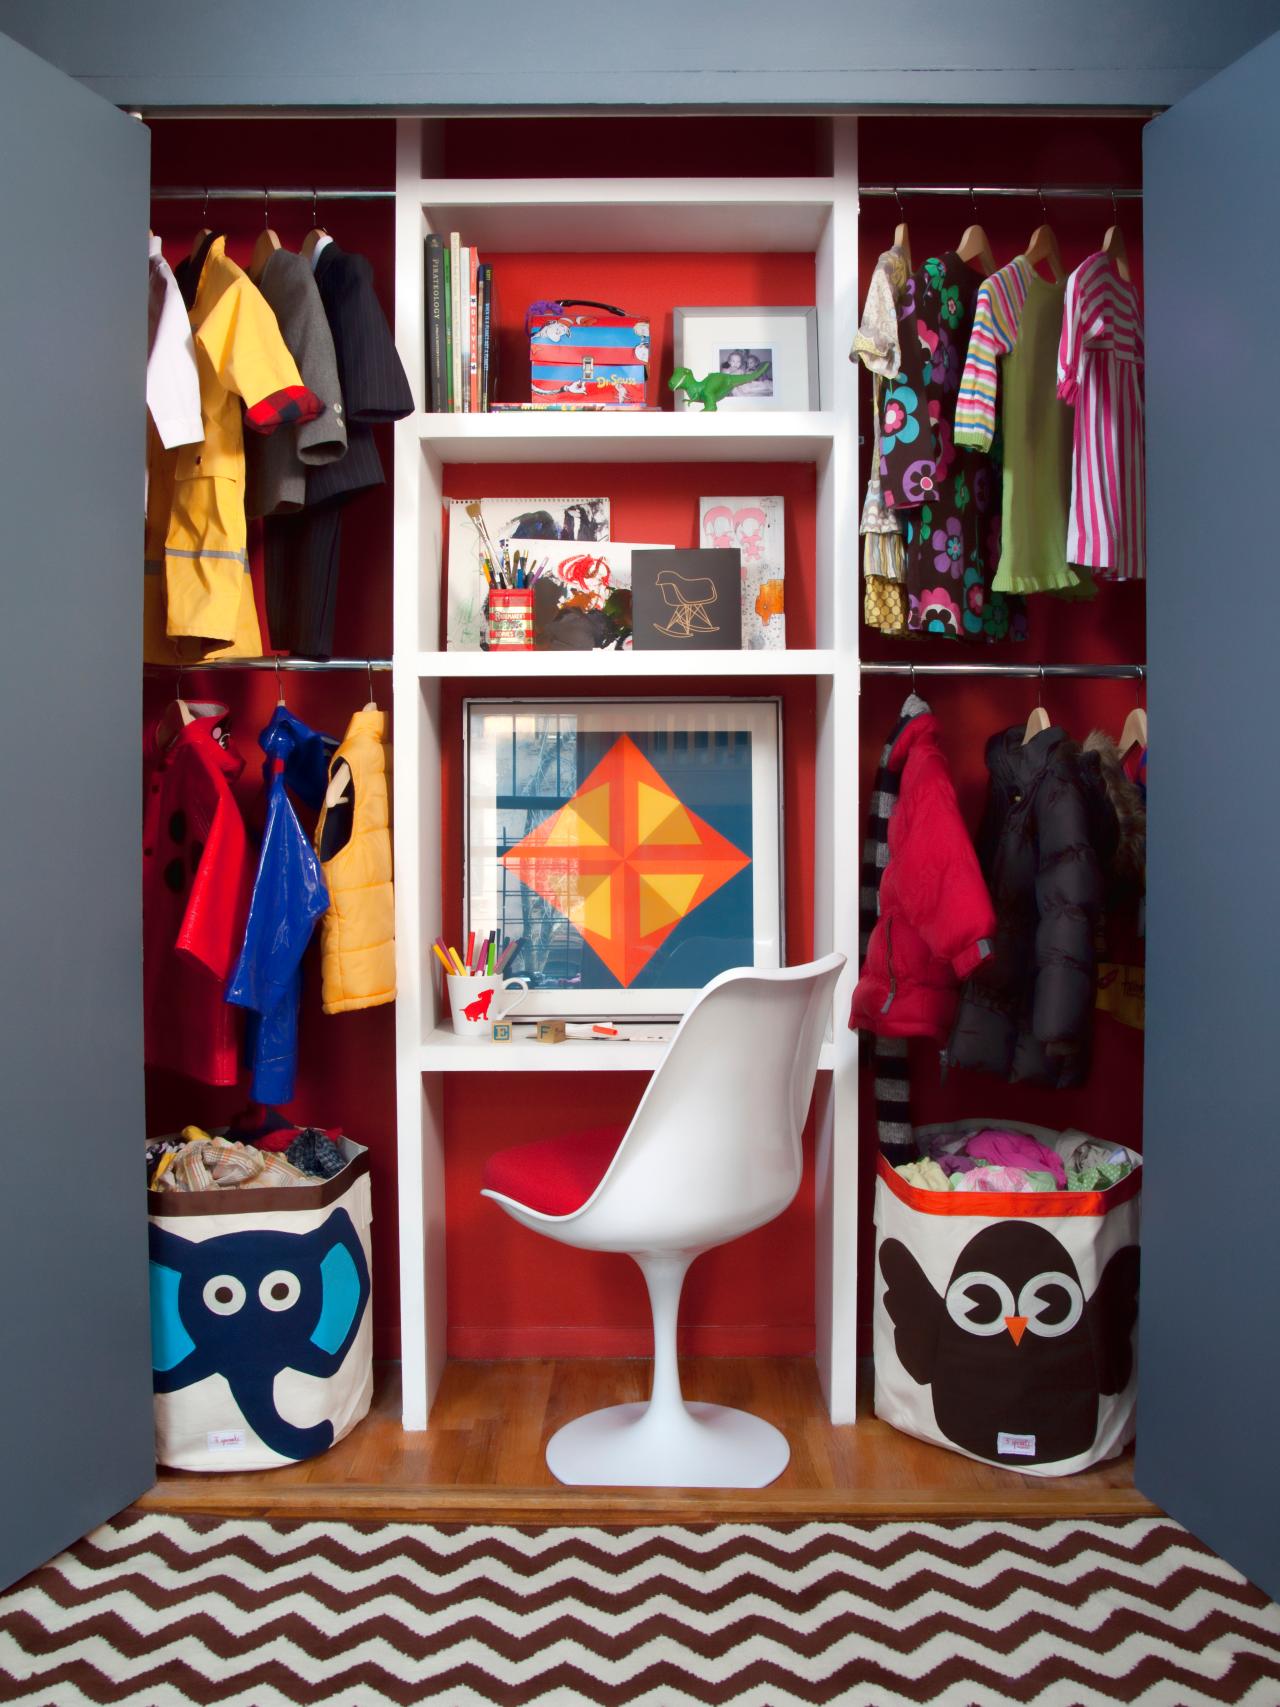 20 Kids Room Storage Ideas - How to Organize Toys, Books & Clothes